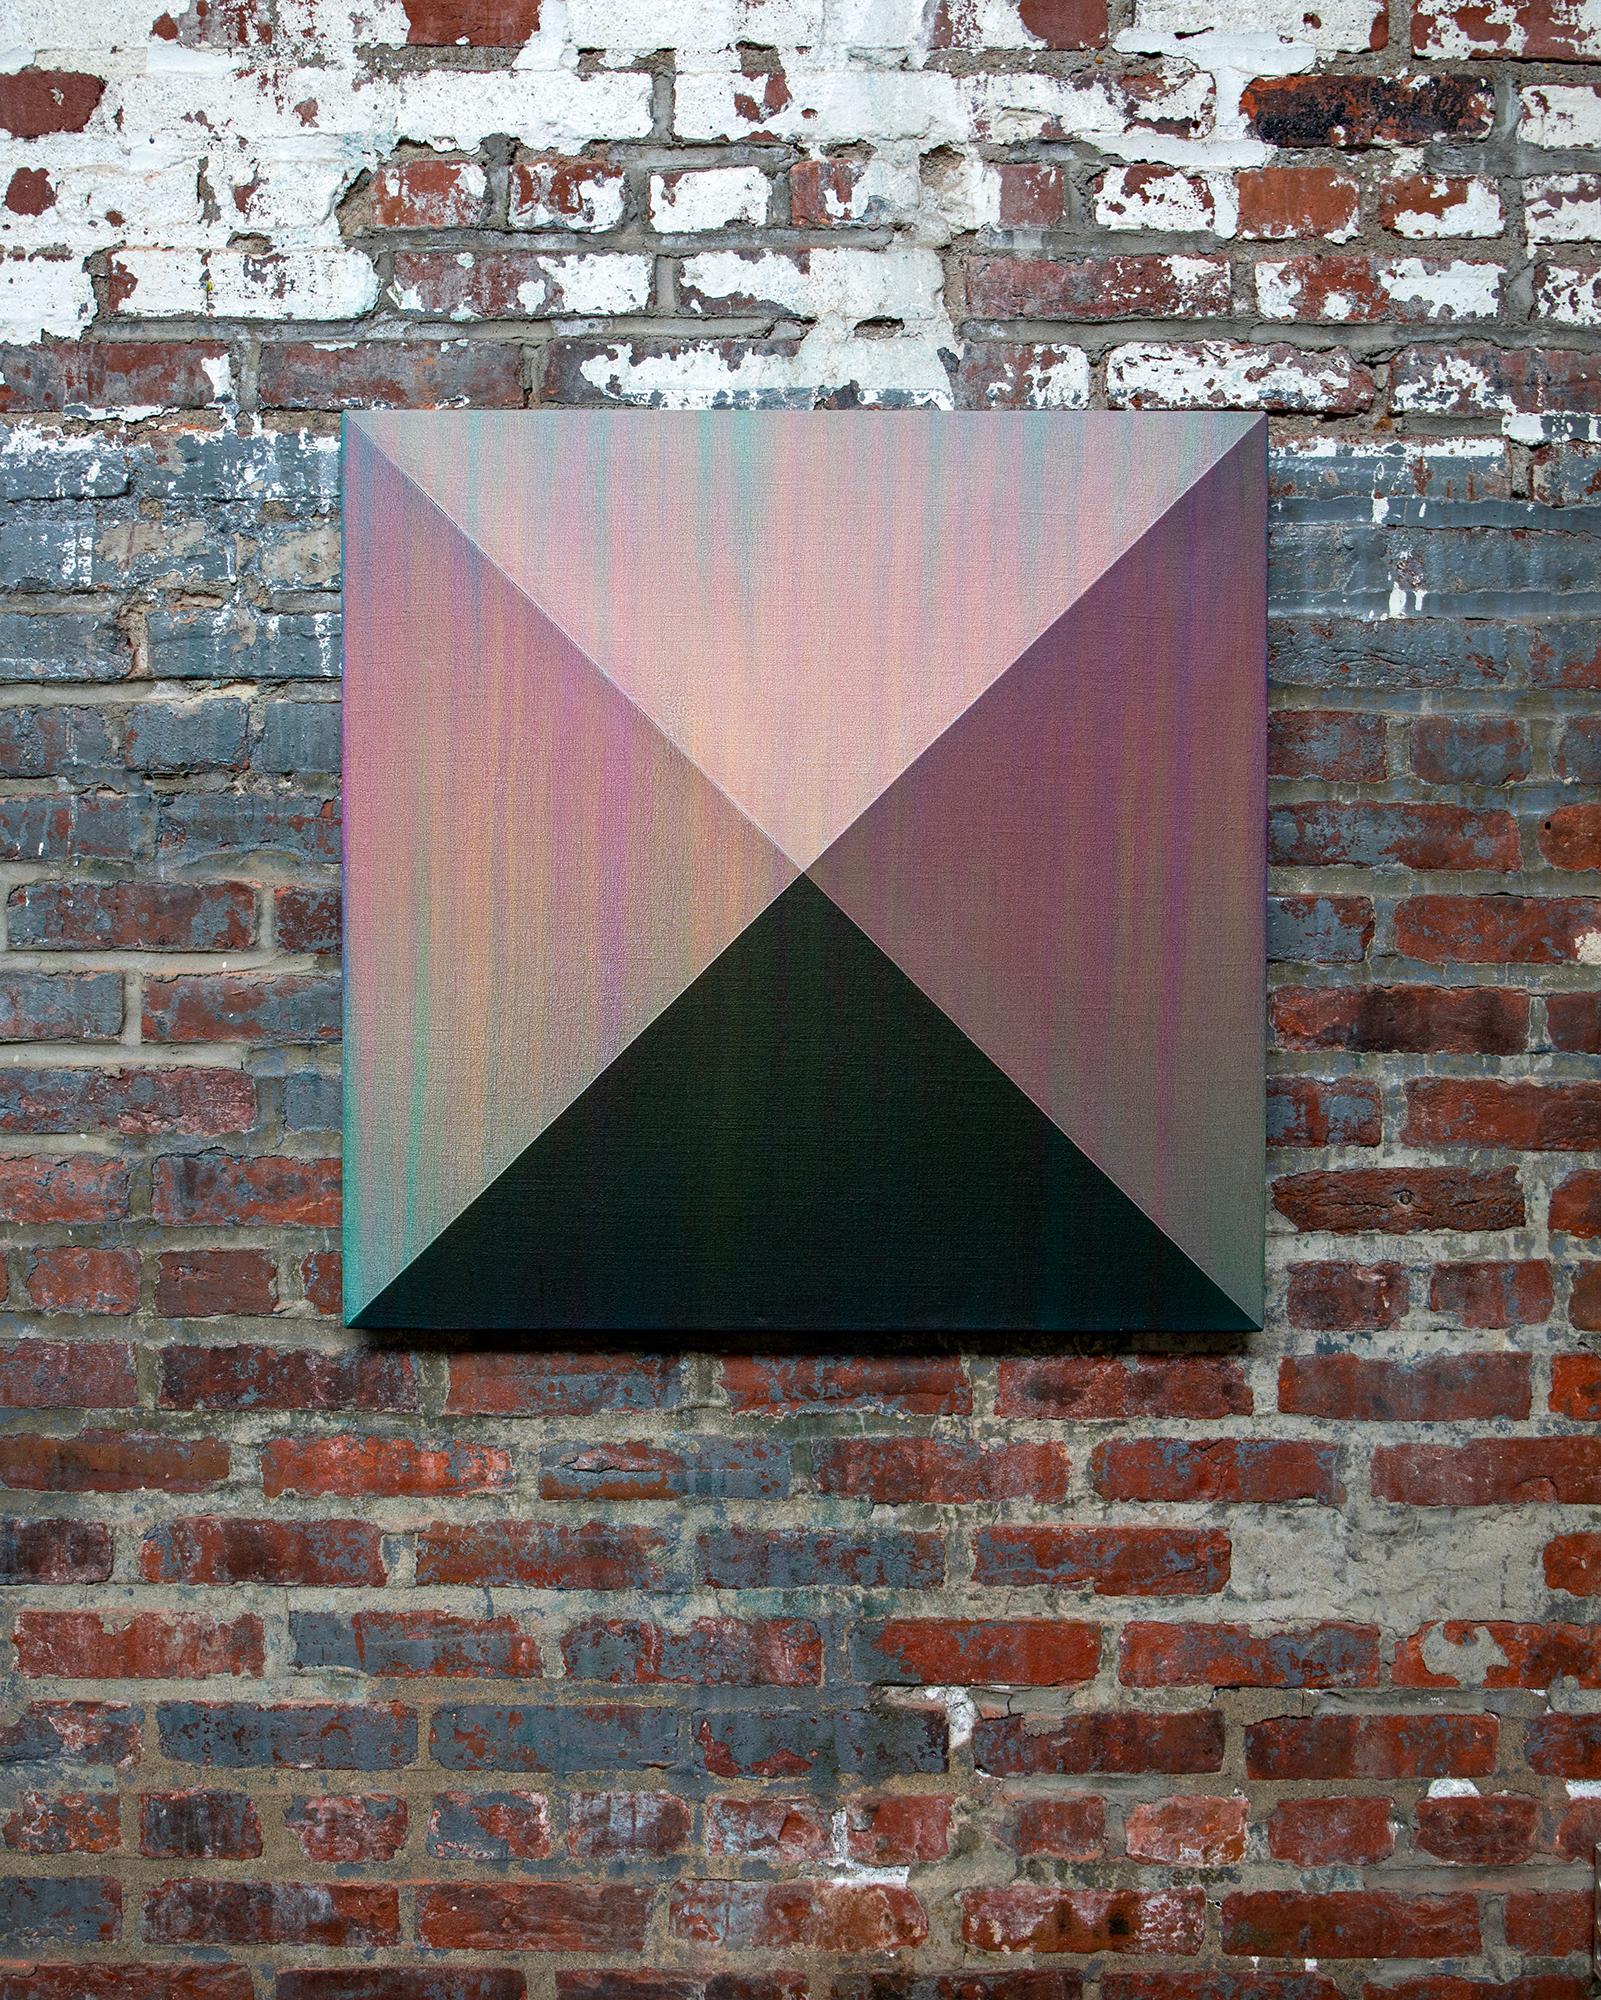 Morgan Sims

Pyramid

28” x 28” x 1.5”

acrylic on linen

2023